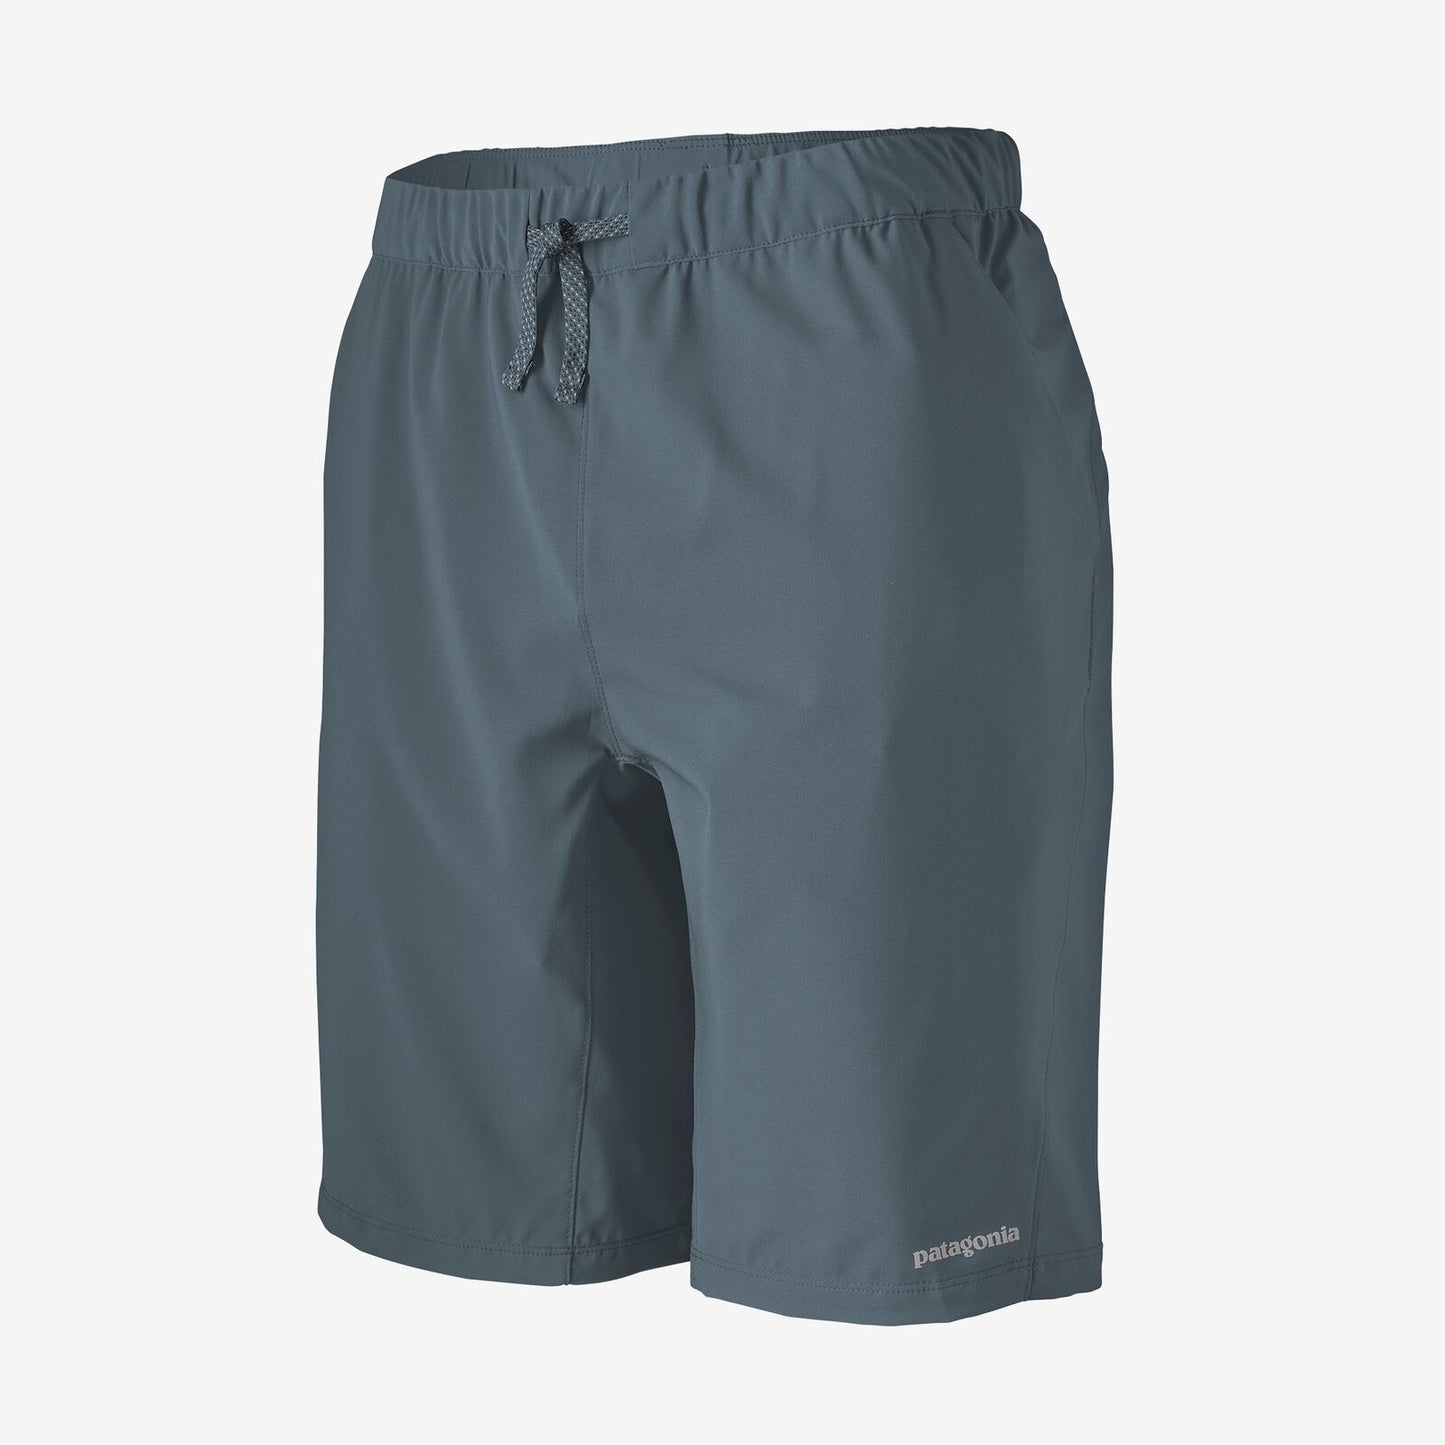 Patagonia Men's Terrebonne Shorts in Plume Grey